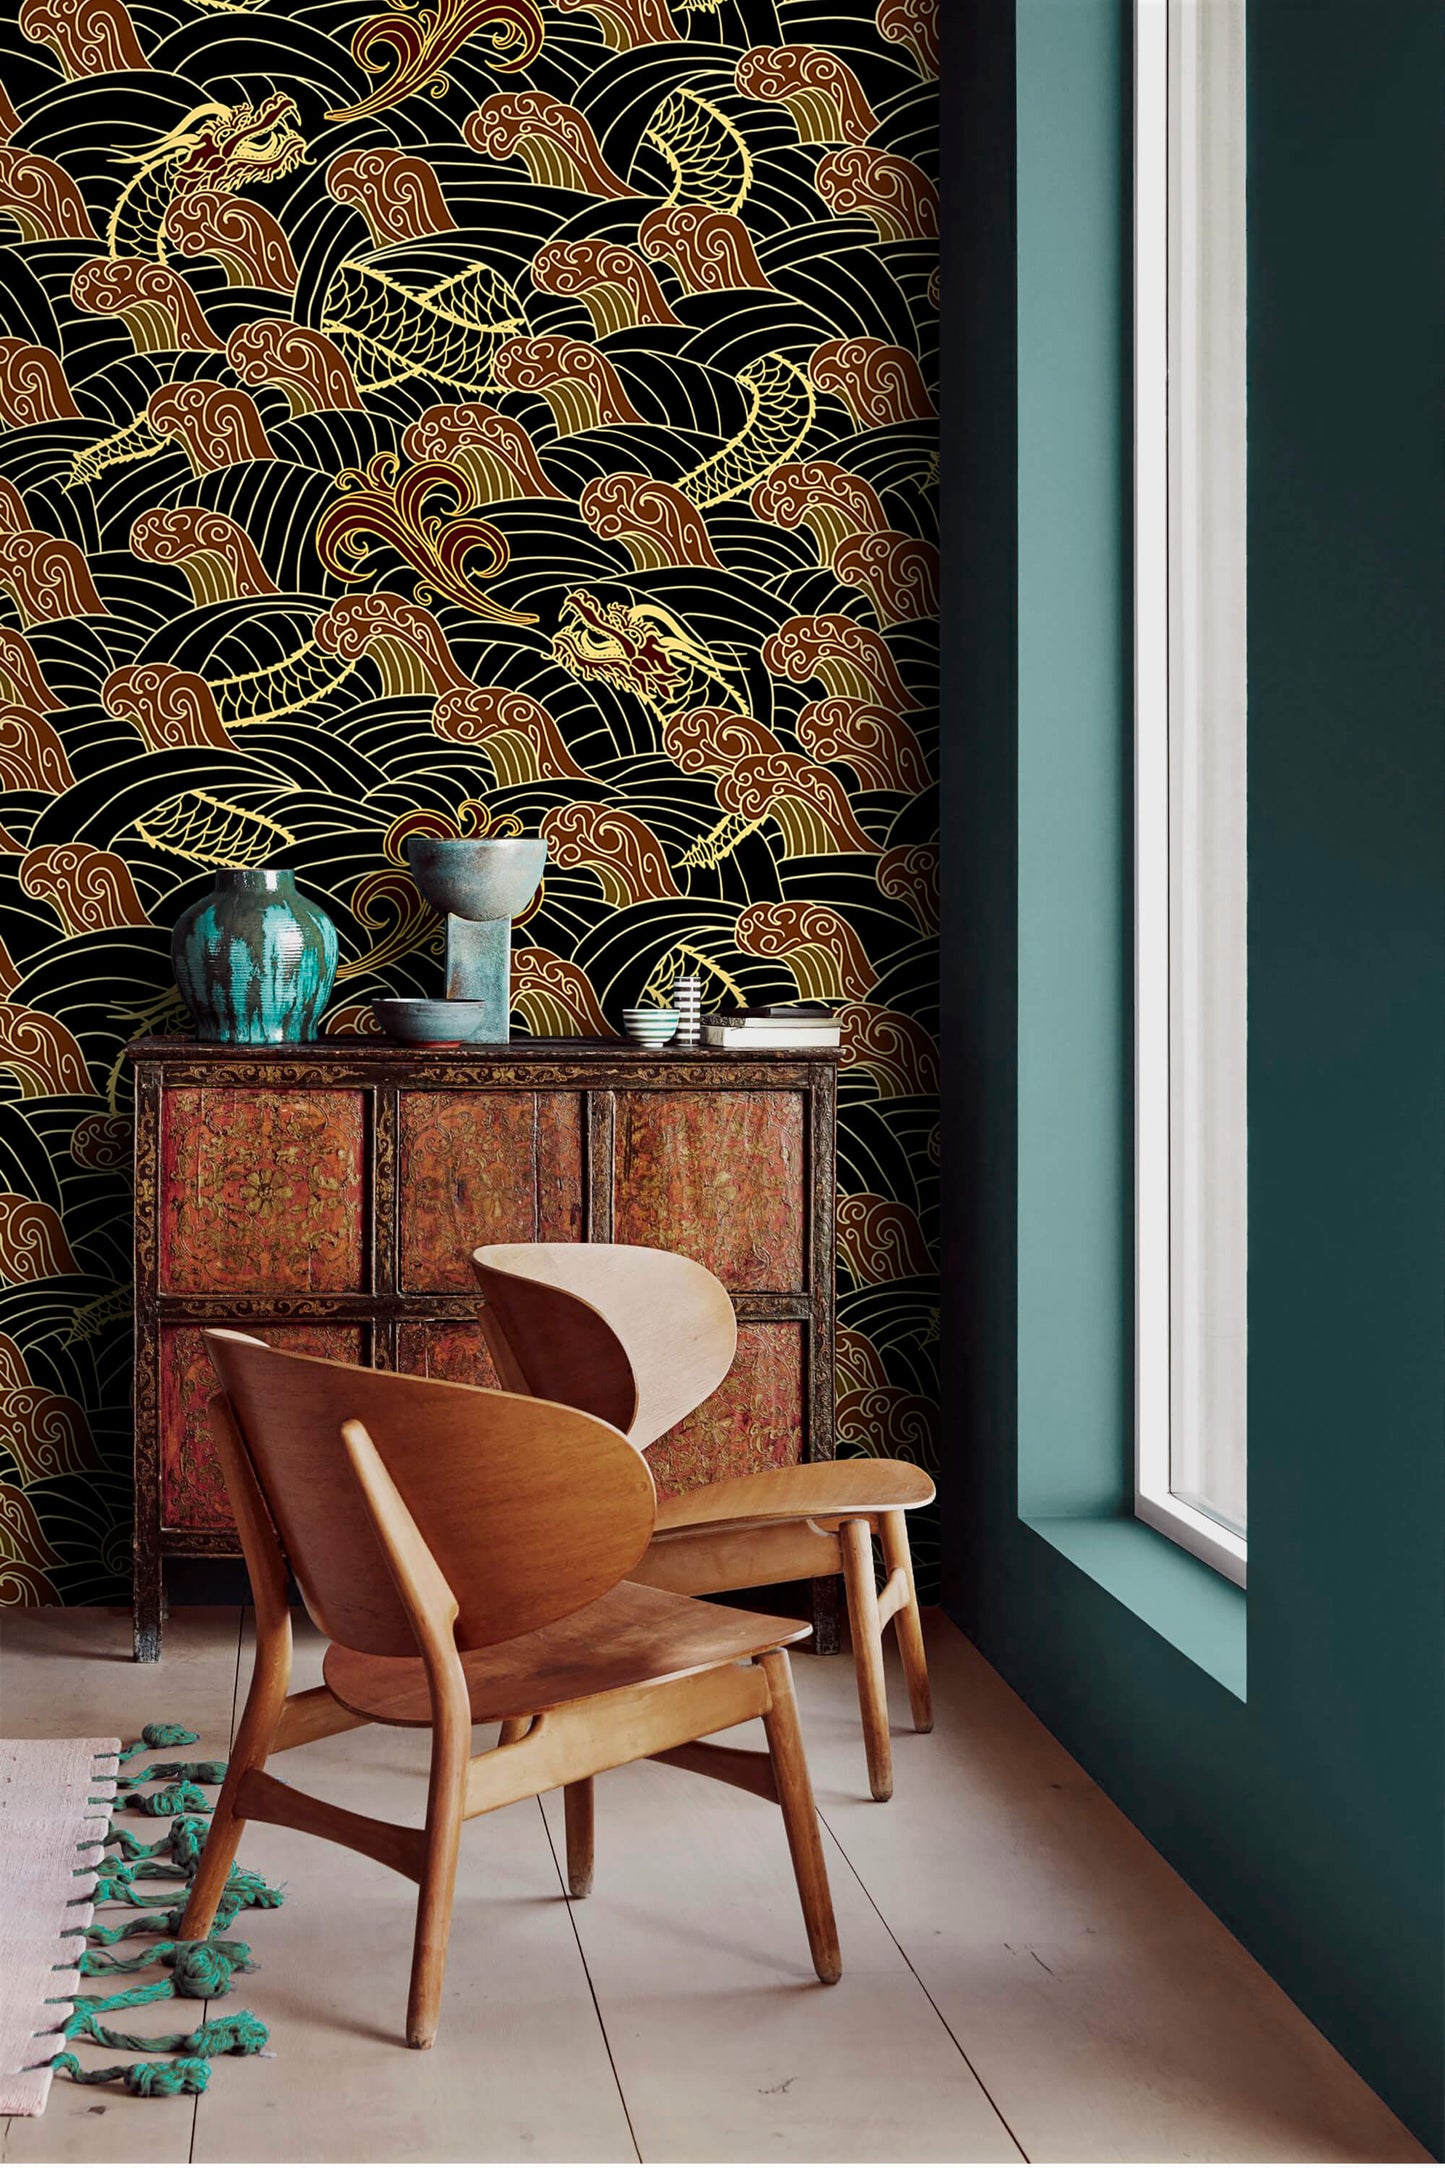 Golden Dragon Waves Wallpaper